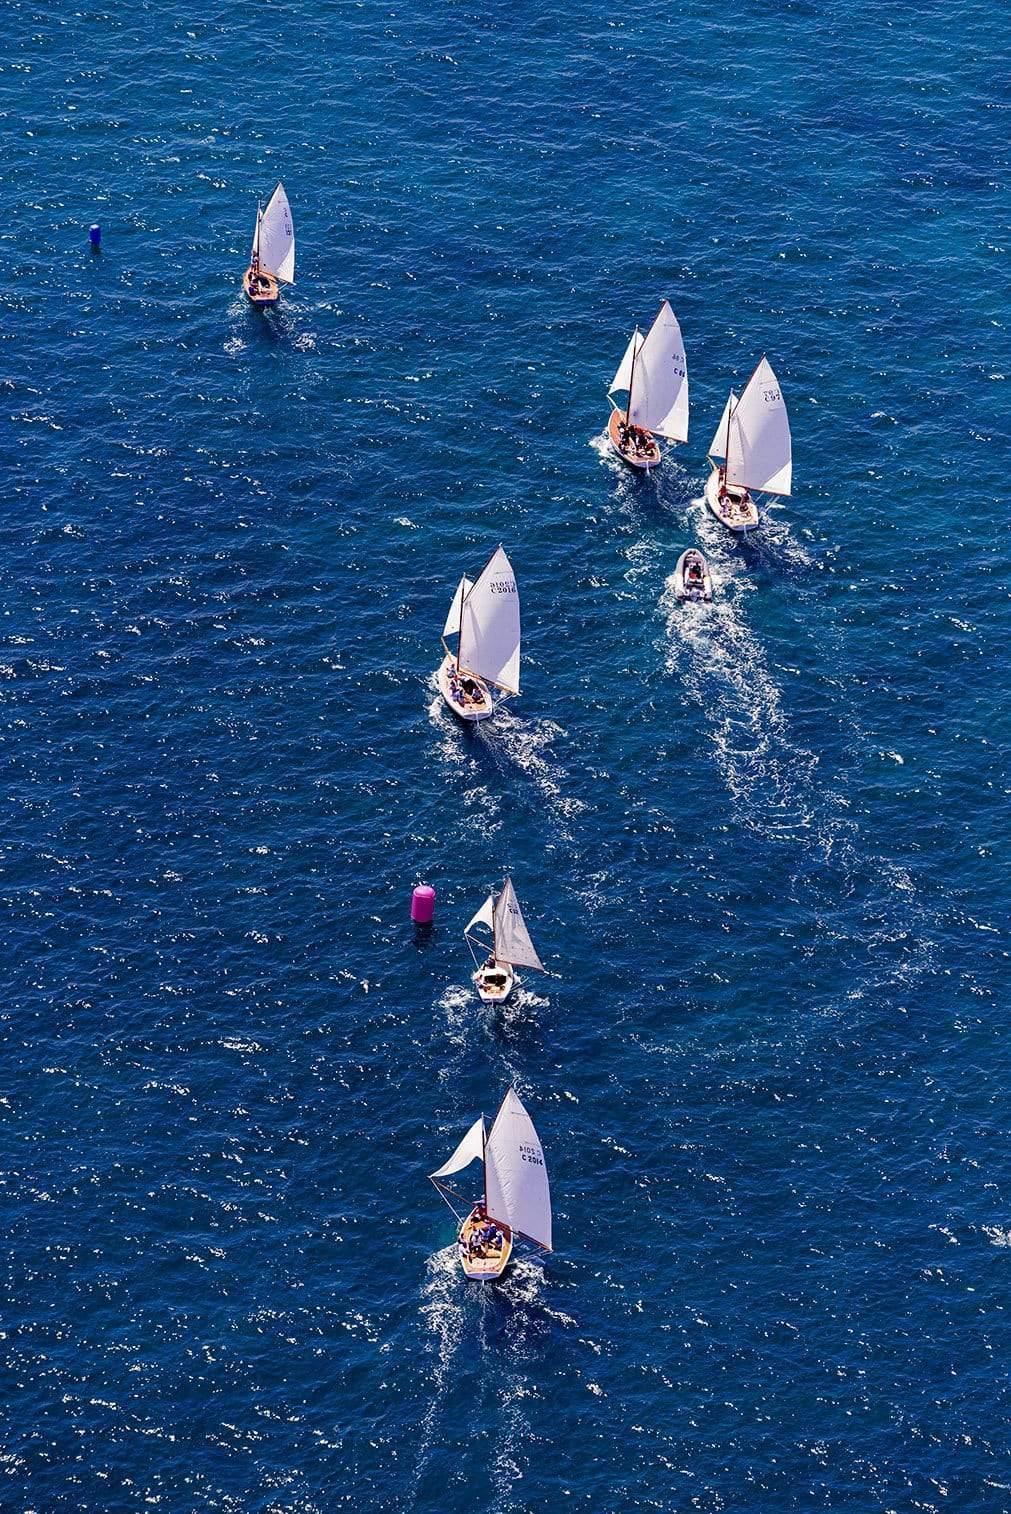 Couta boat racing in the dark blue ocean, Couta boat racing, Sorrento - Mornington Peninsula Victoria 